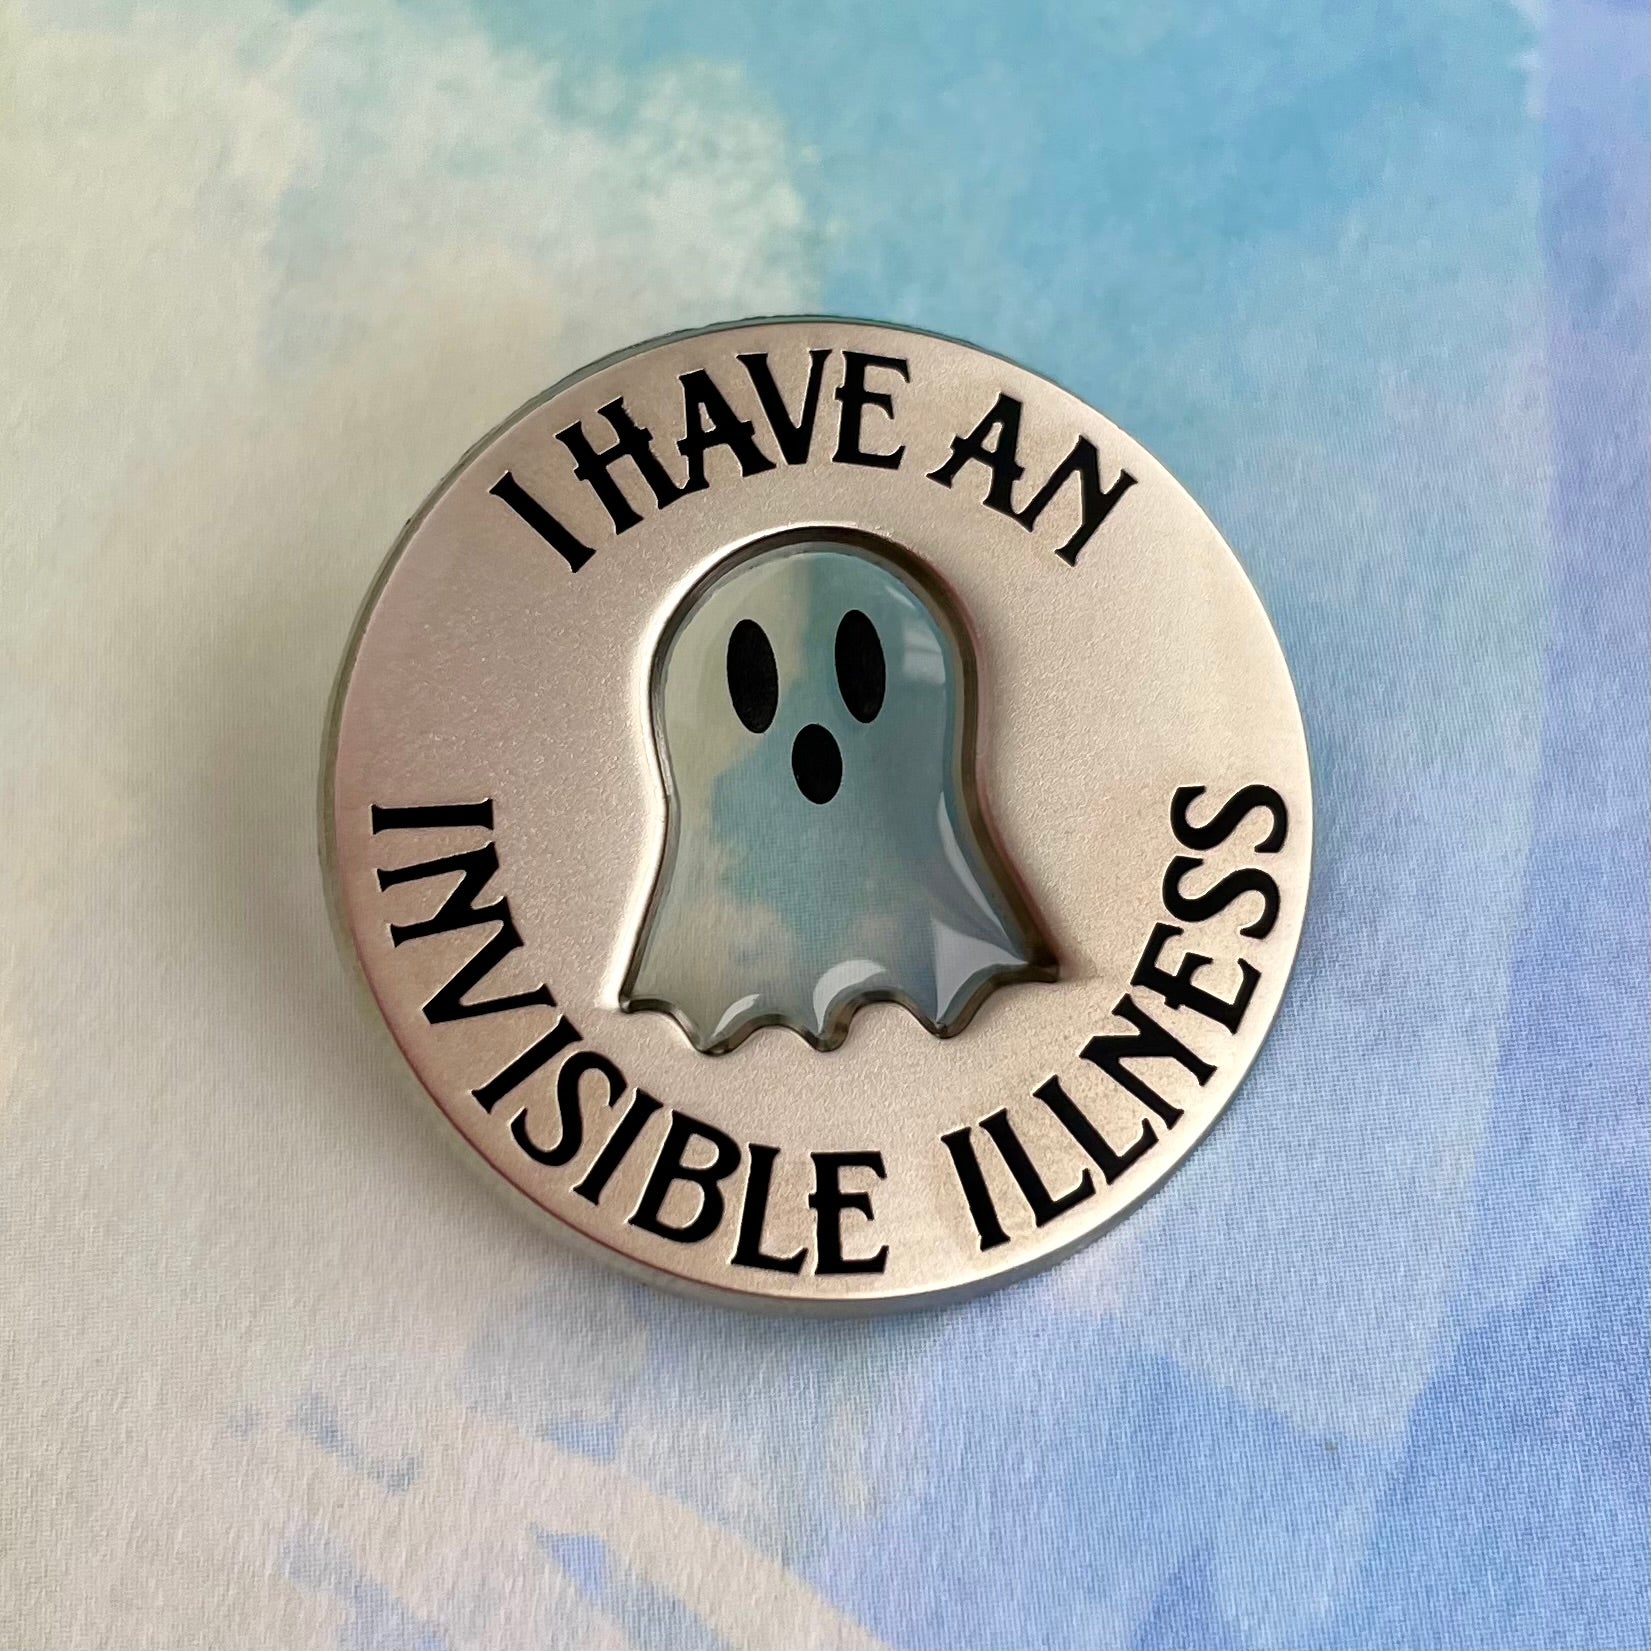 I Have A Hidden Disability Pin Badge Button